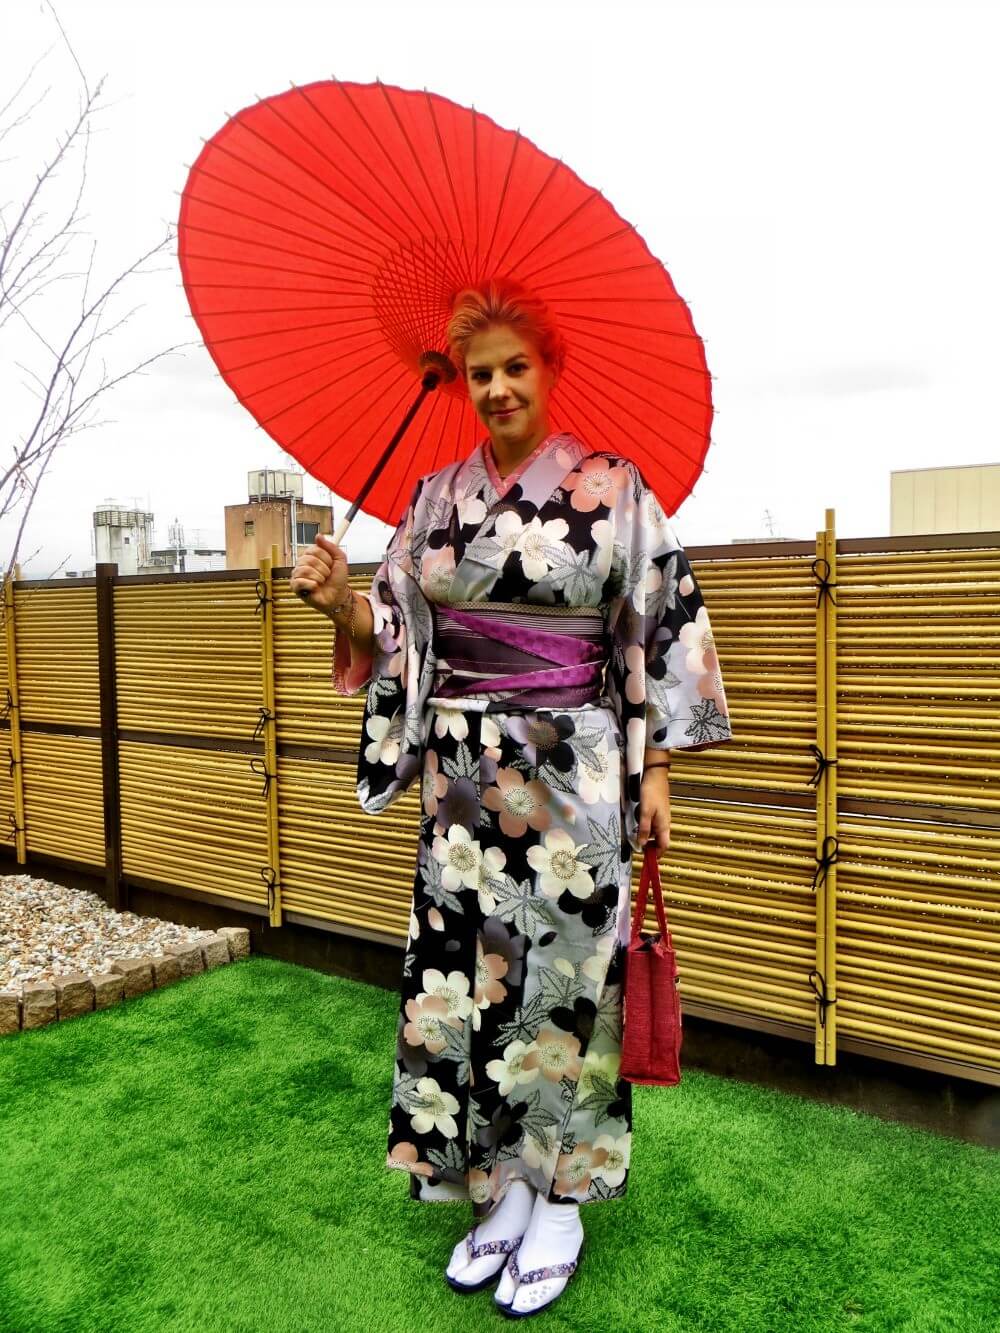 Dressing up as a Geisha girl